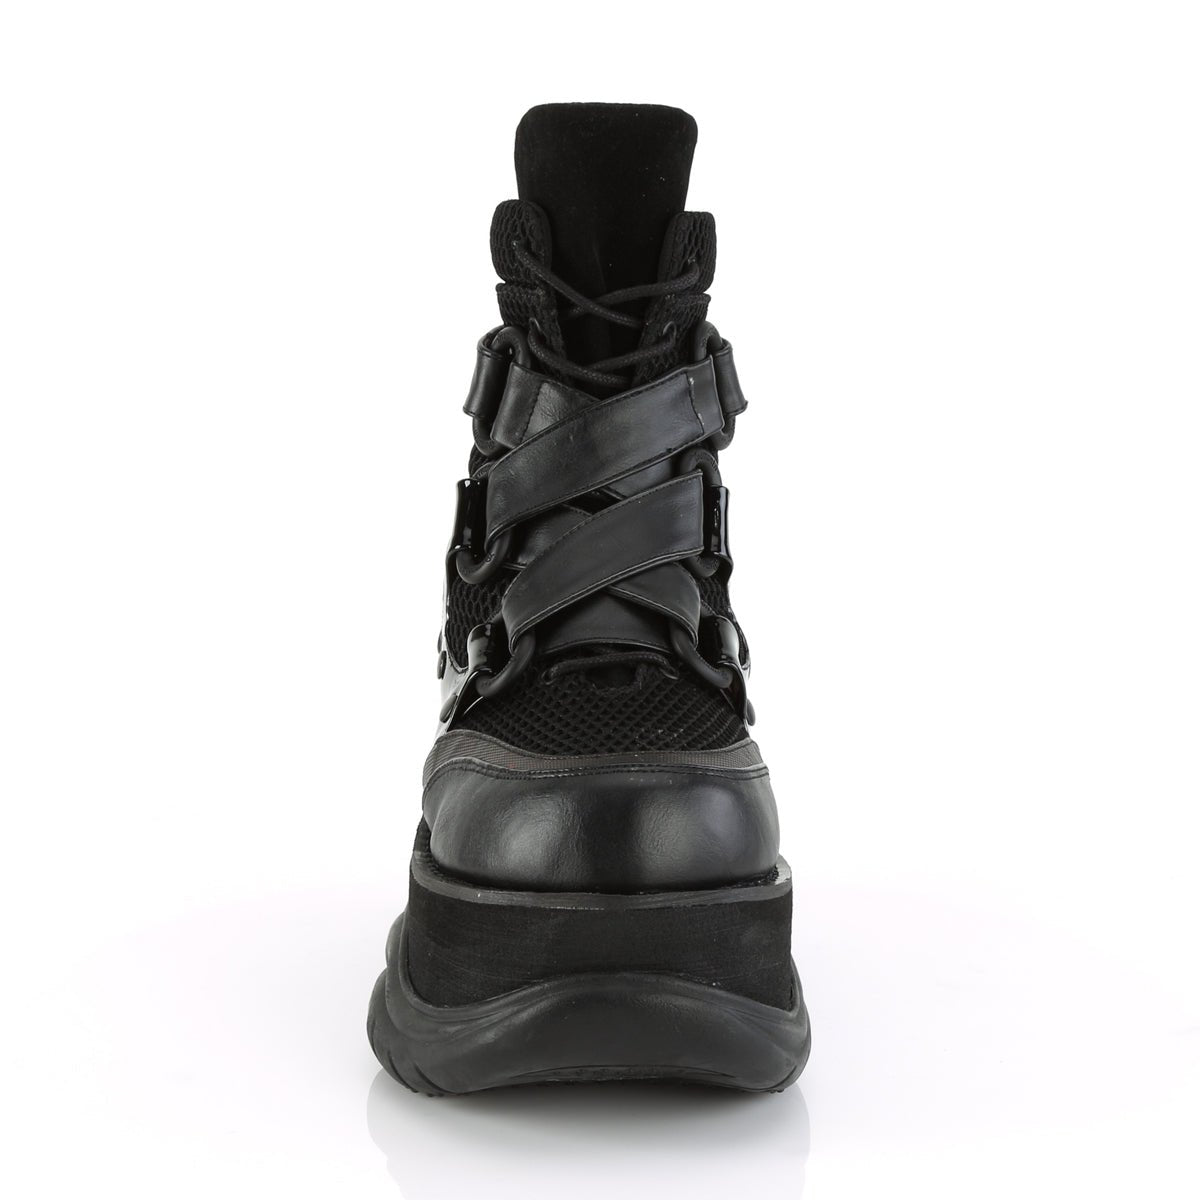 Too Fast | Demonia Neptune 126 | Black Vegan Leather, Fishnet Fabric & Patent Leather Unisex Platform Boots